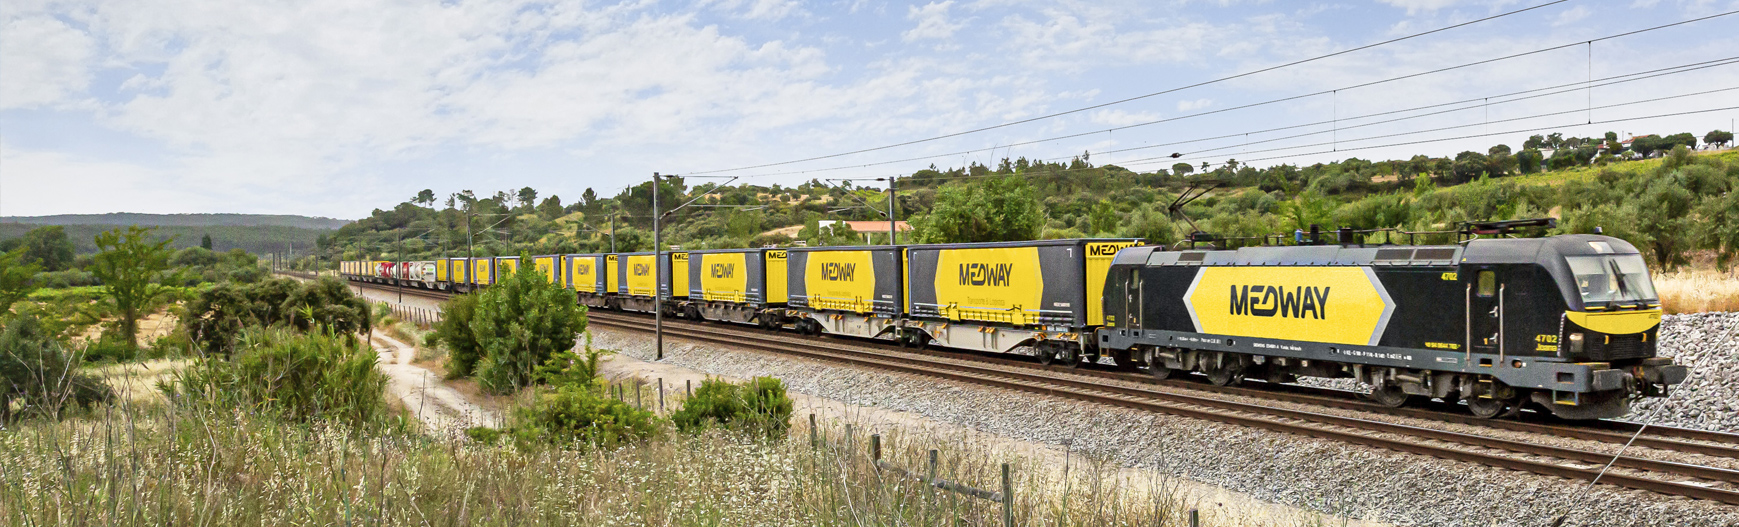 Multi Modal Freight Railway Transportation